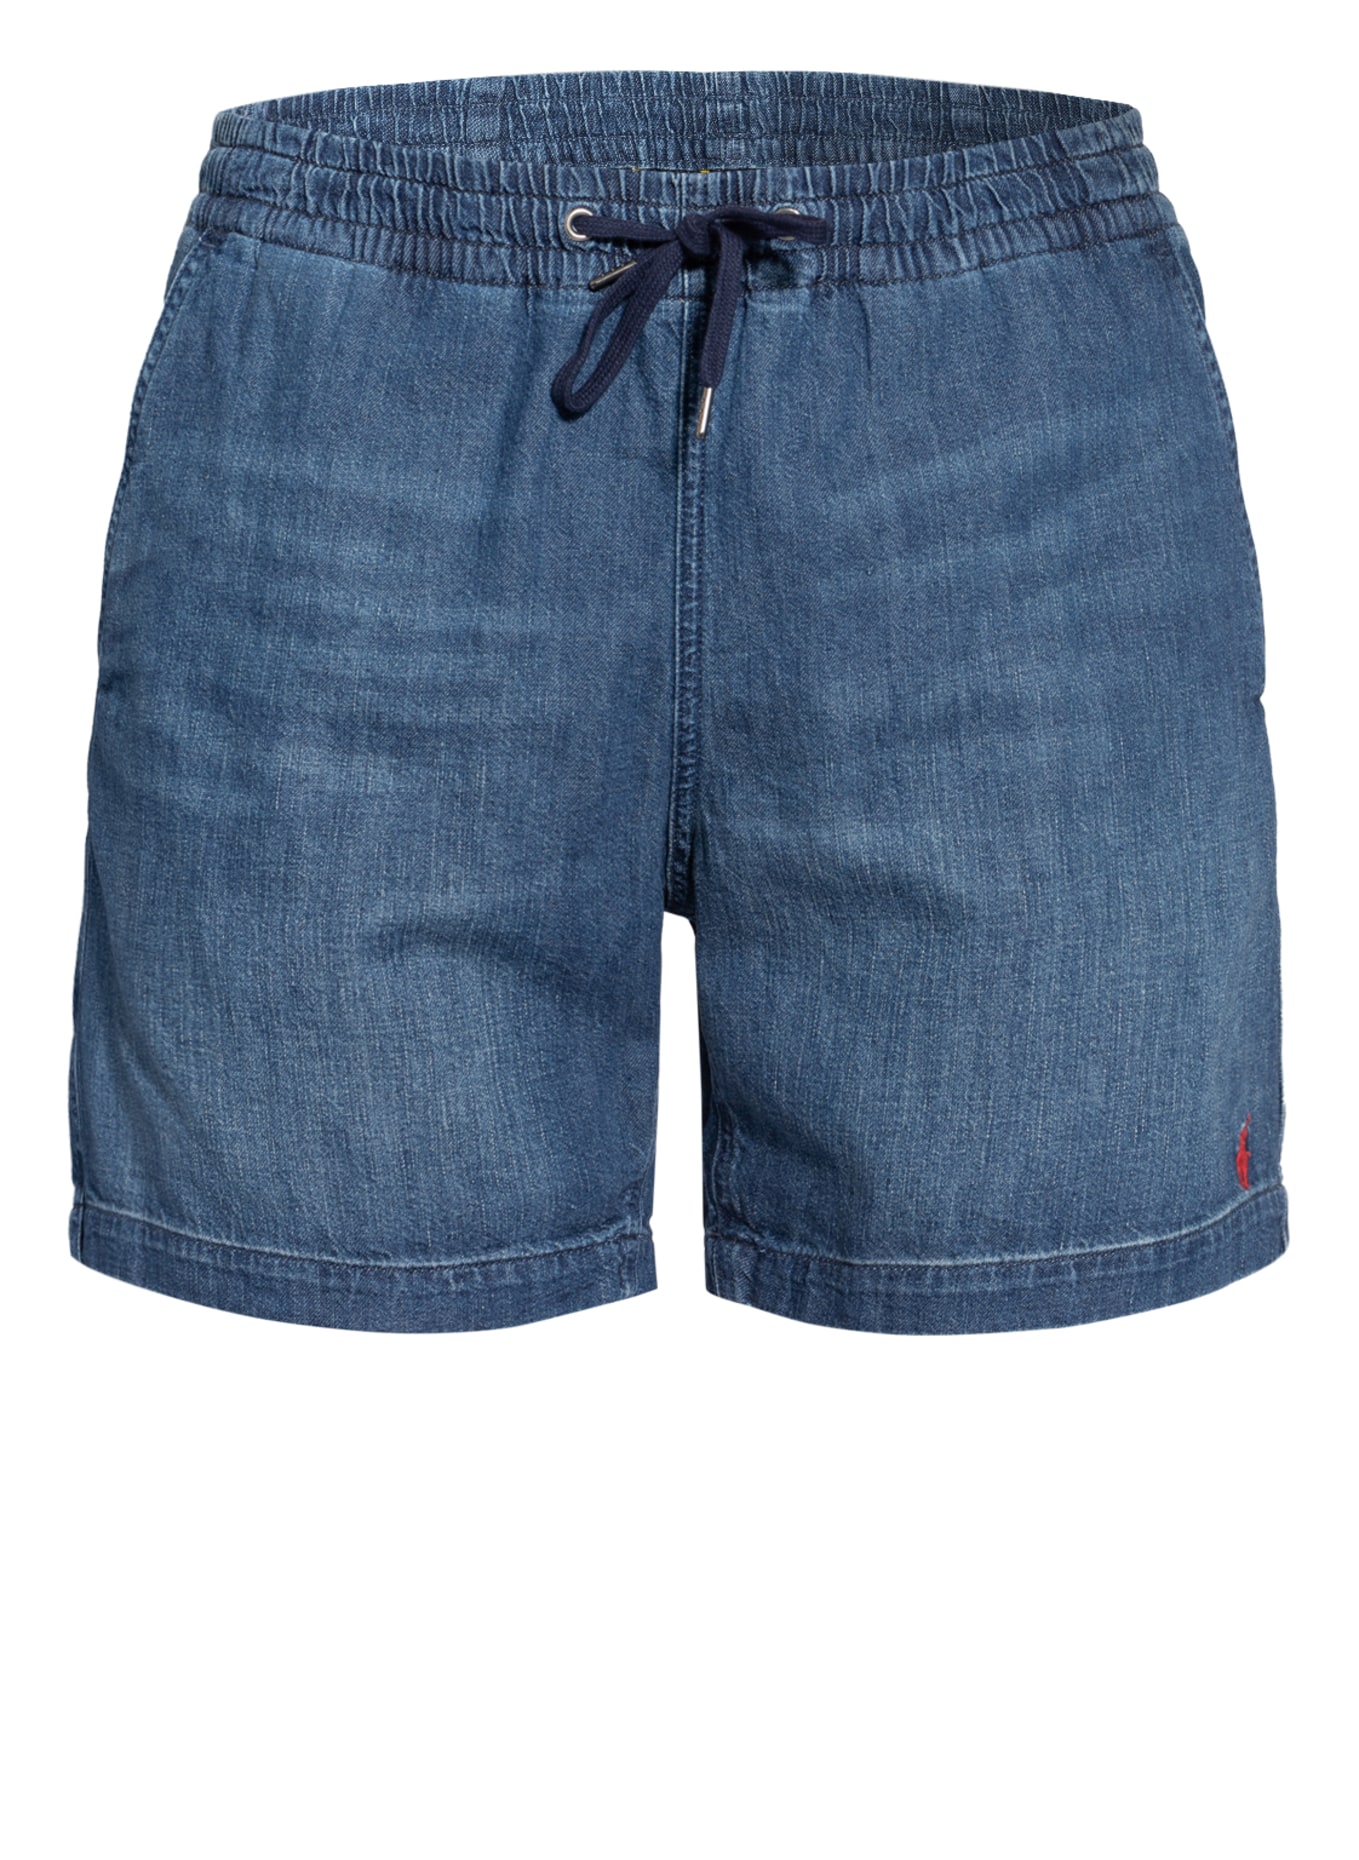 POLO RALPH LAUREN Jeans-Shorts, Farbe: 001 BLANE (Bild 1)